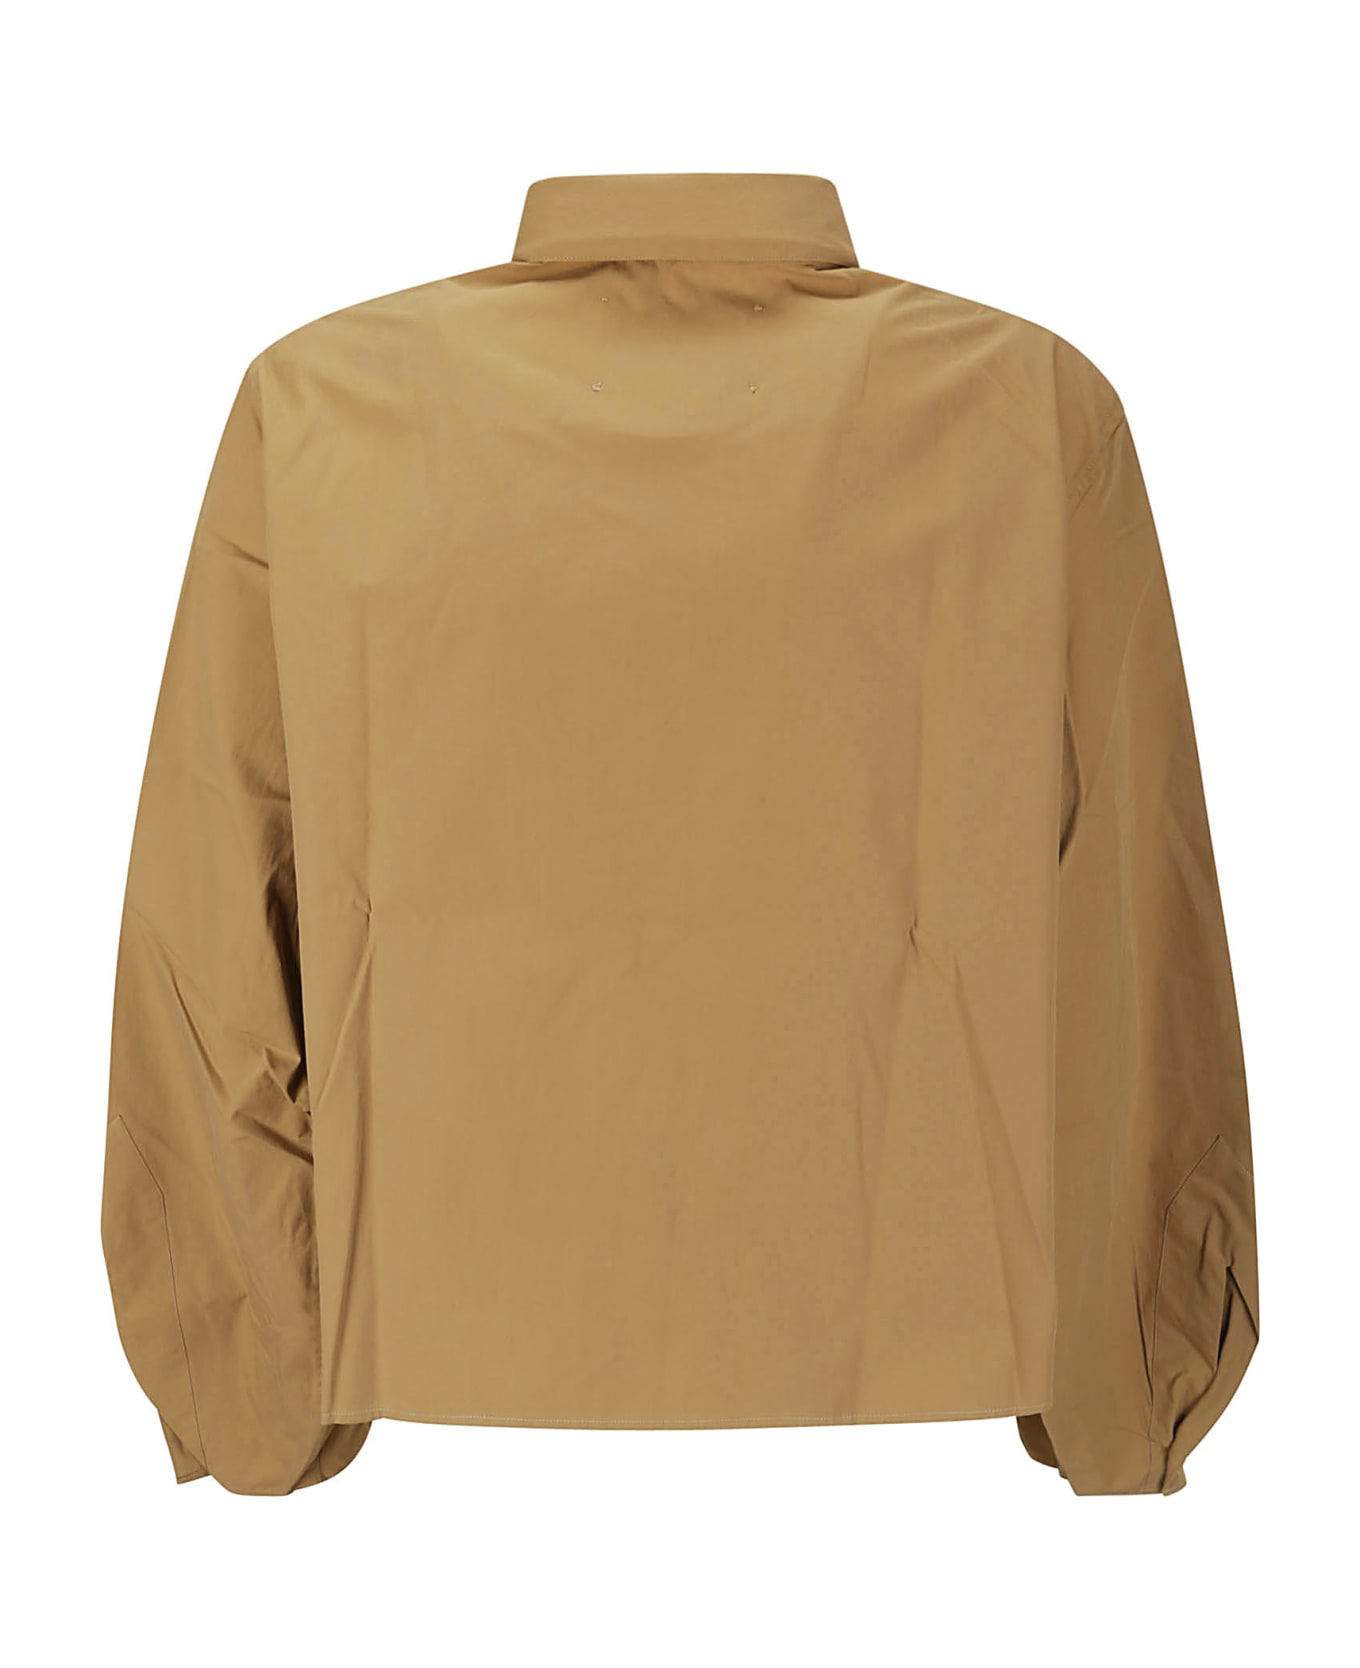 Studio Nicholson Shirts - Curved Sleeve Cropped Shirt - SAND